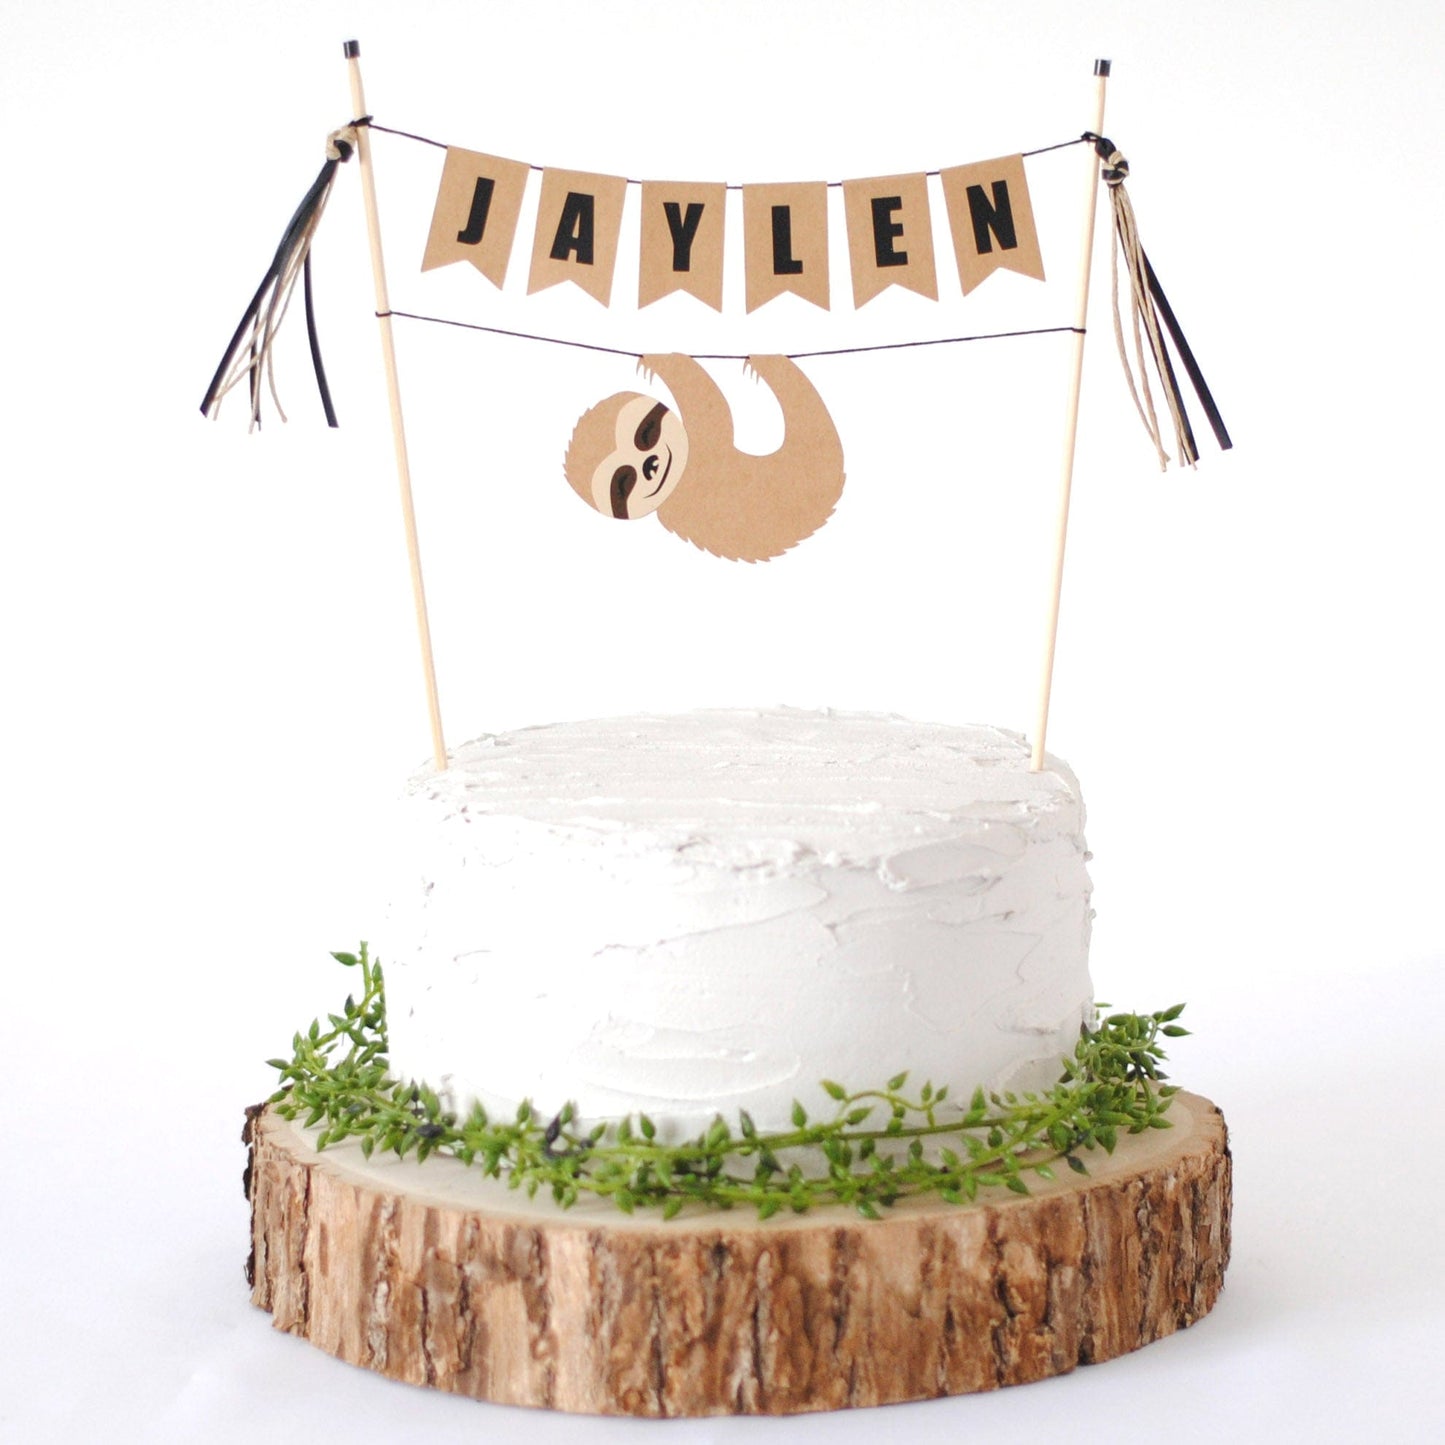 sloth birthday cake topper | personalized cake topper | Avalon sunshine